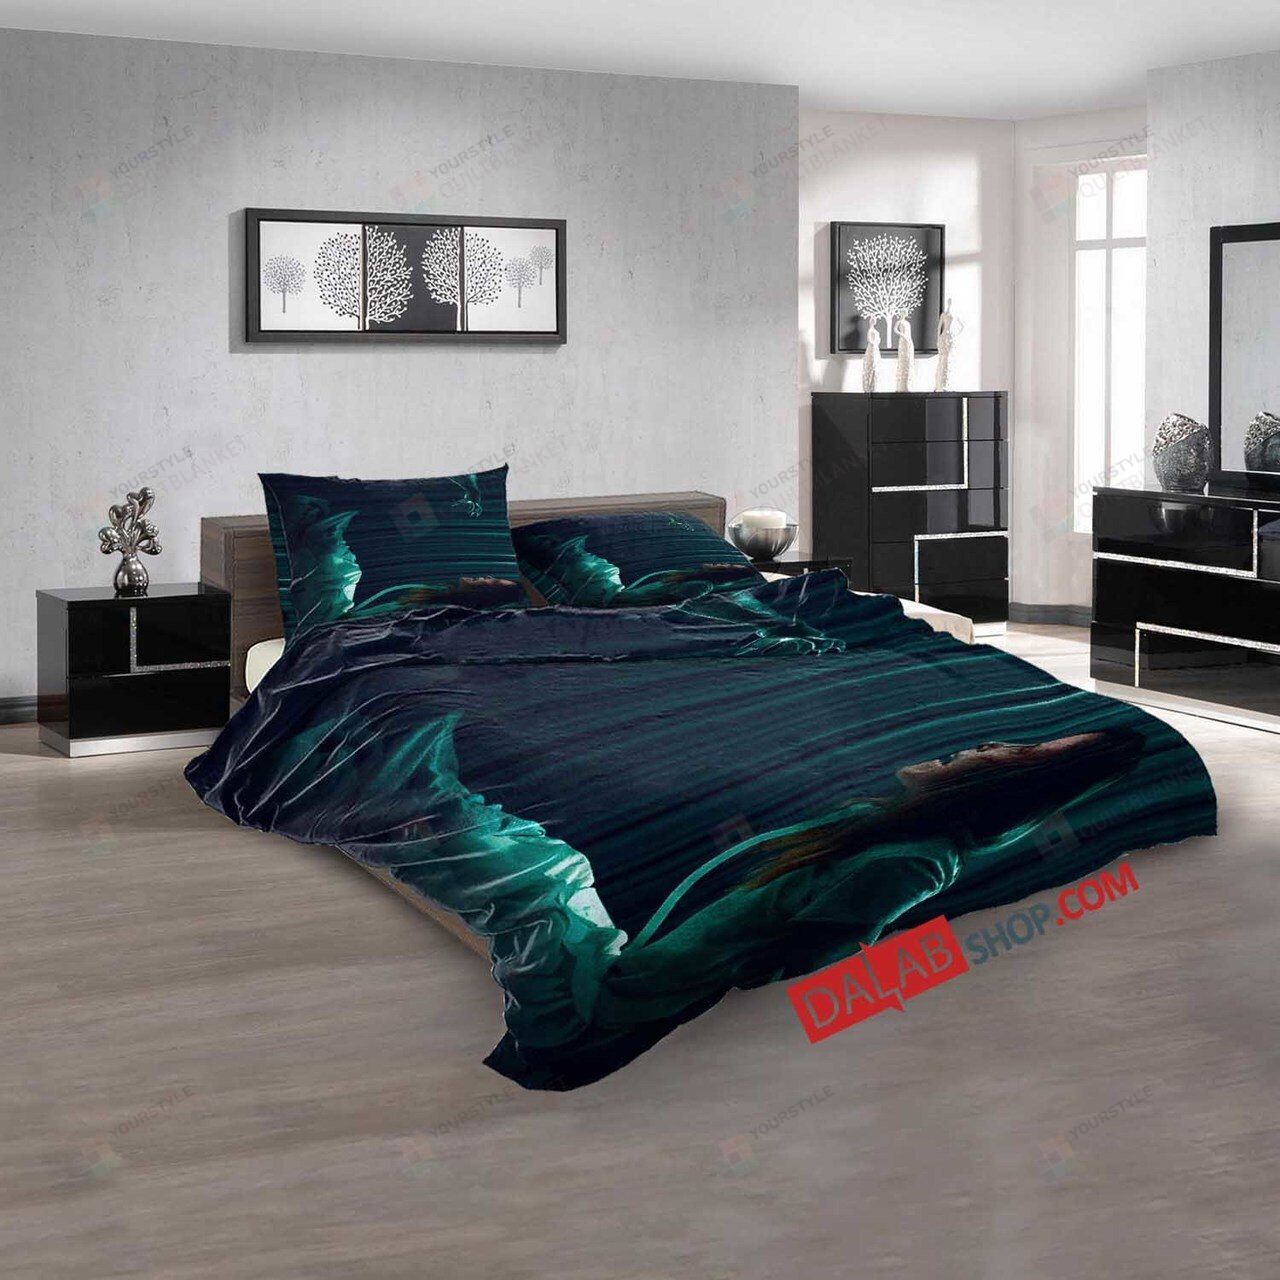 Movie Nails D 3d Customized Duvet Cover Bedroom Sets Bedding Sets